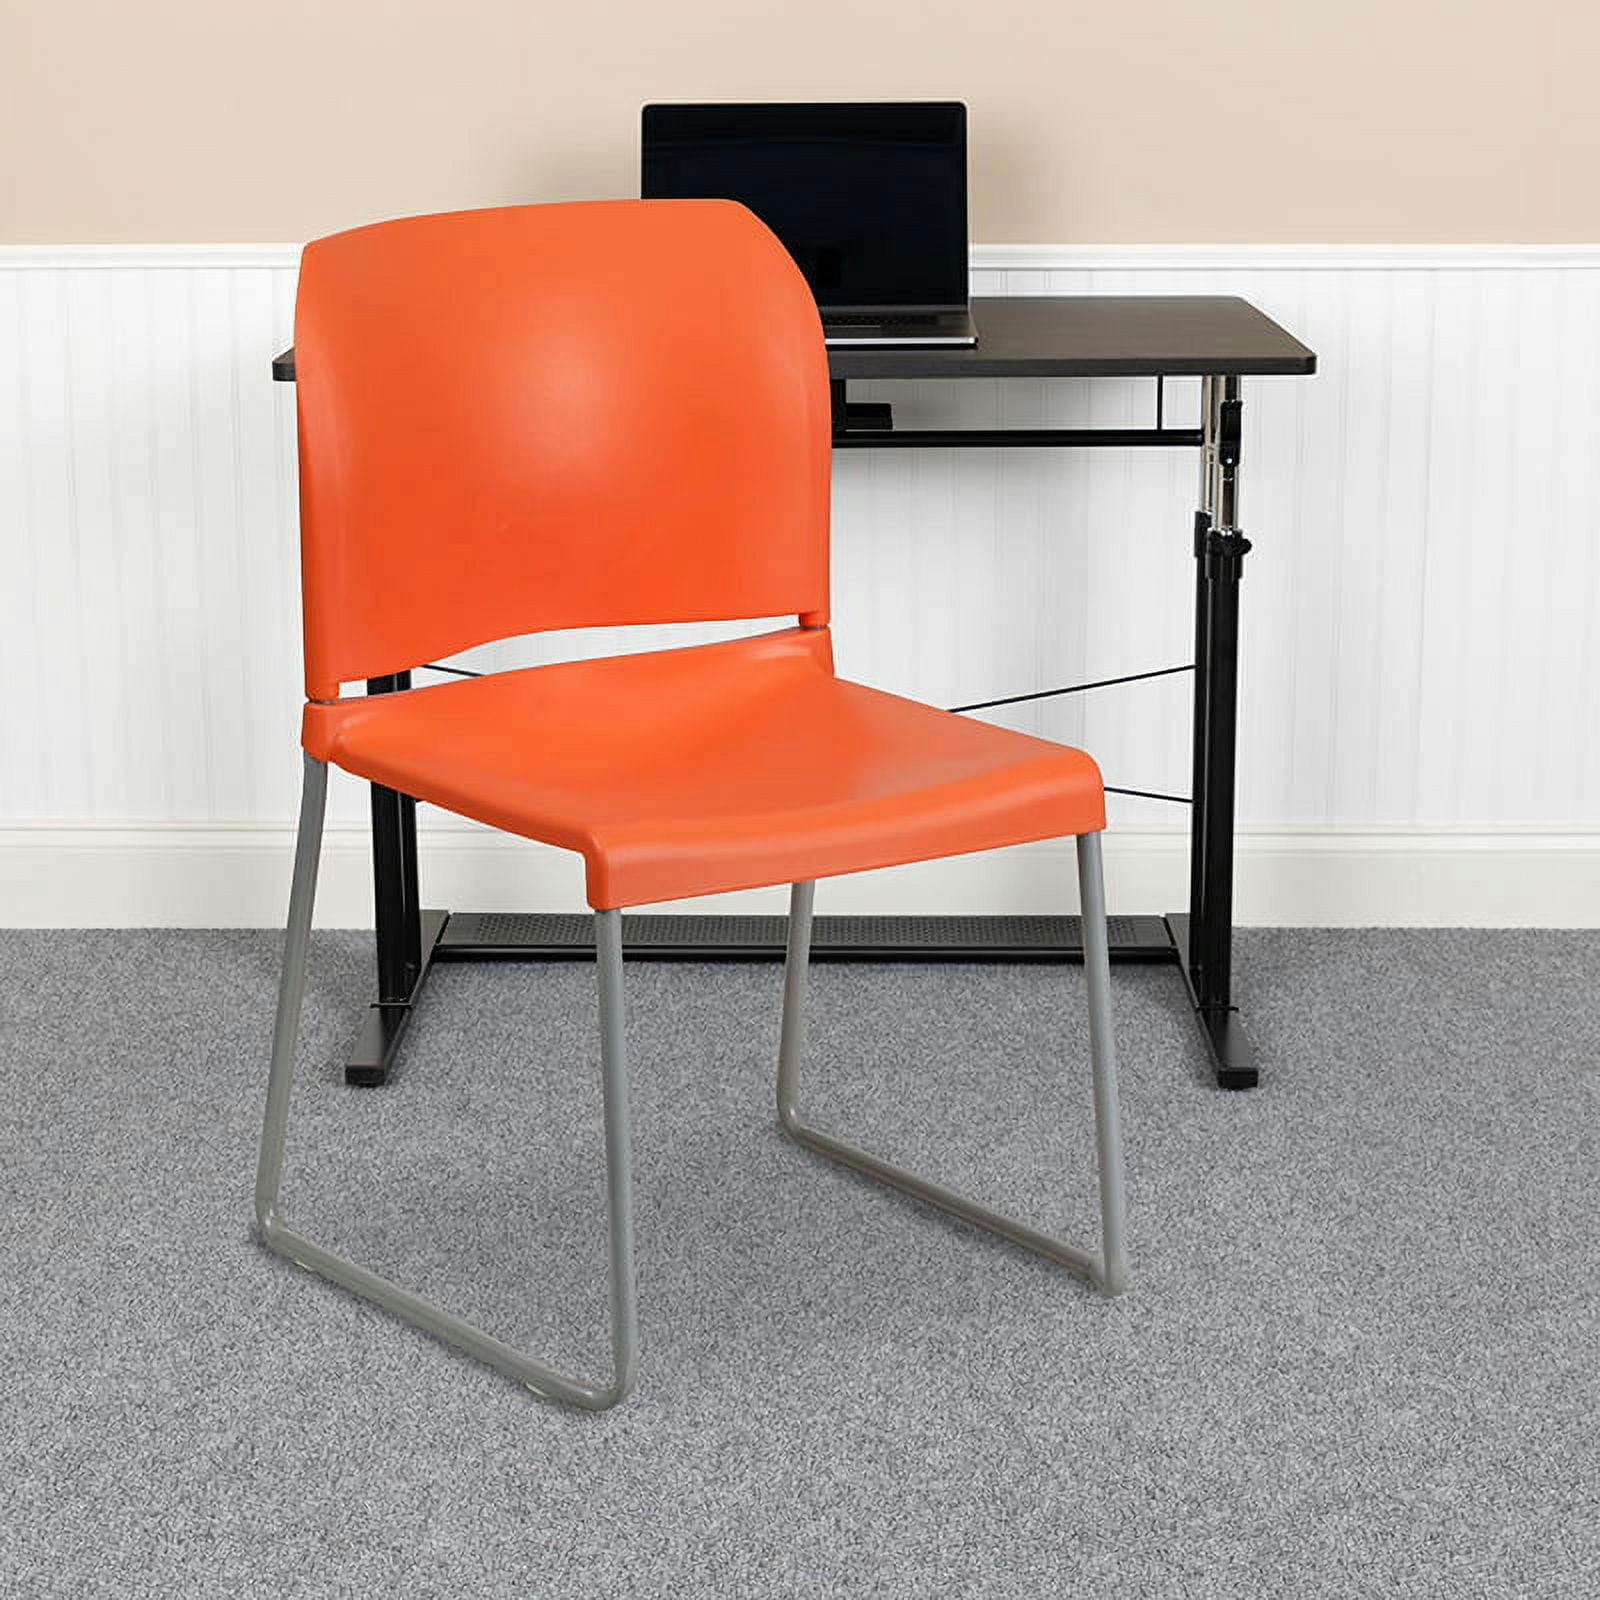 Hercules 880 lb. Capacity Orange Metal Stack Chair with Sleek Design